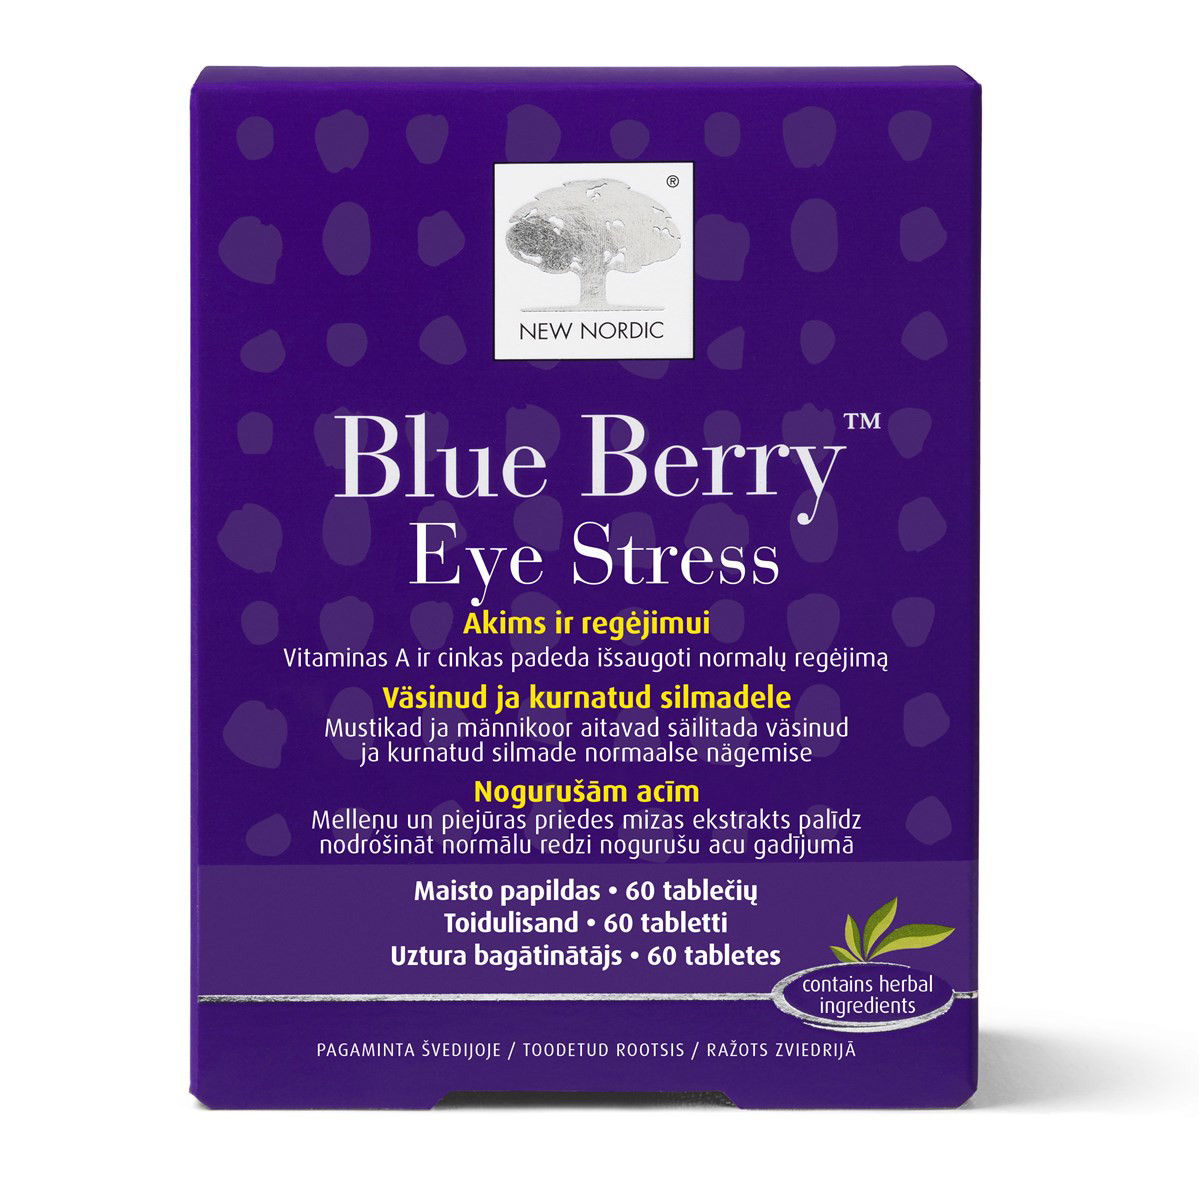 NEW NORDIC BLUE BERRY EYE STRESS, 60 tablečių